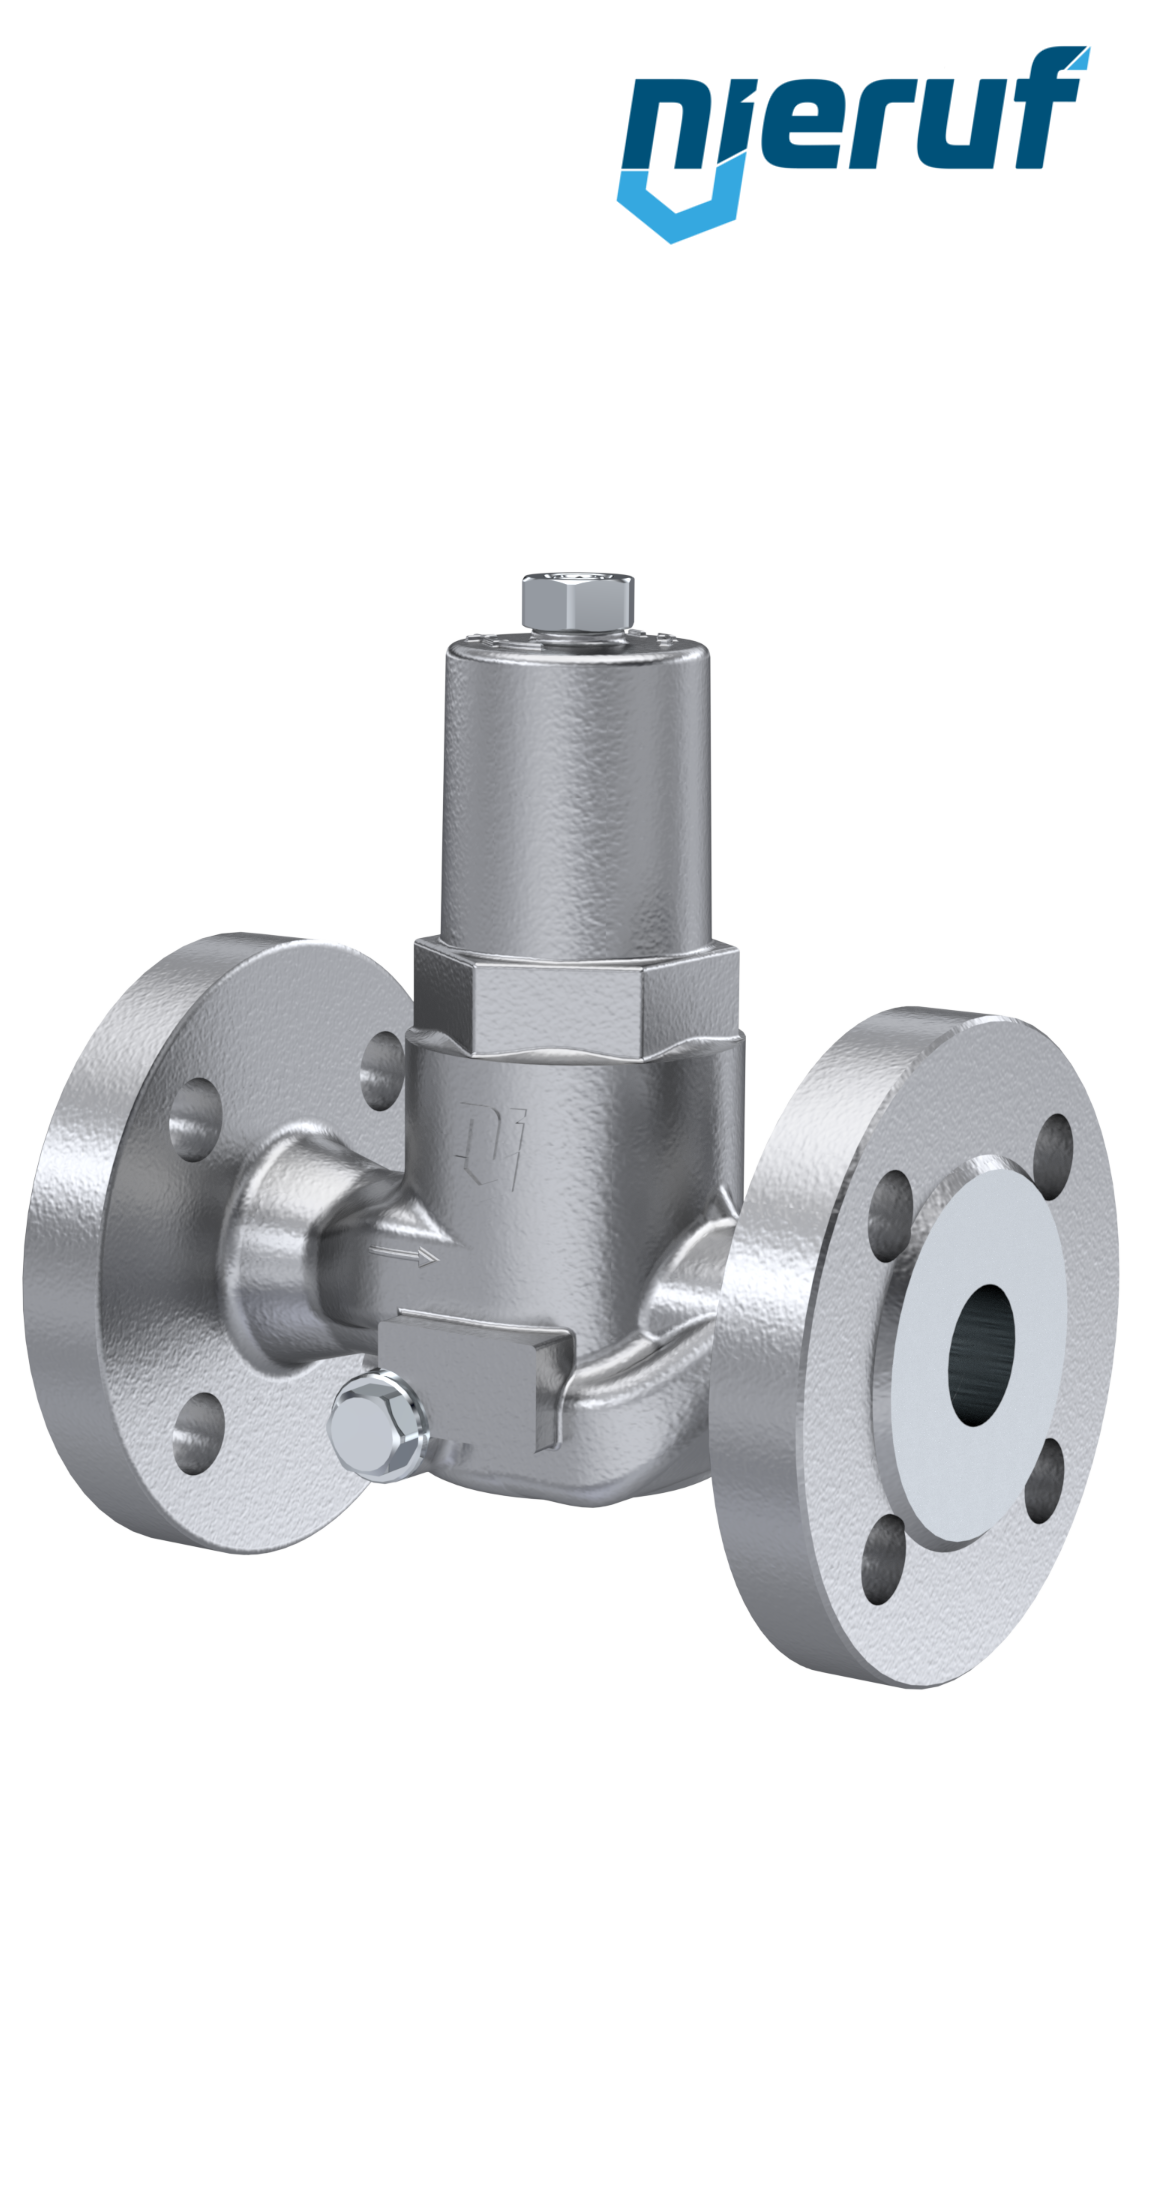 Flange-pressure reducing valve DN20 DM13 flange ANSI 150 stainless steel FPM / FKM 1.5 - 6.0 bar